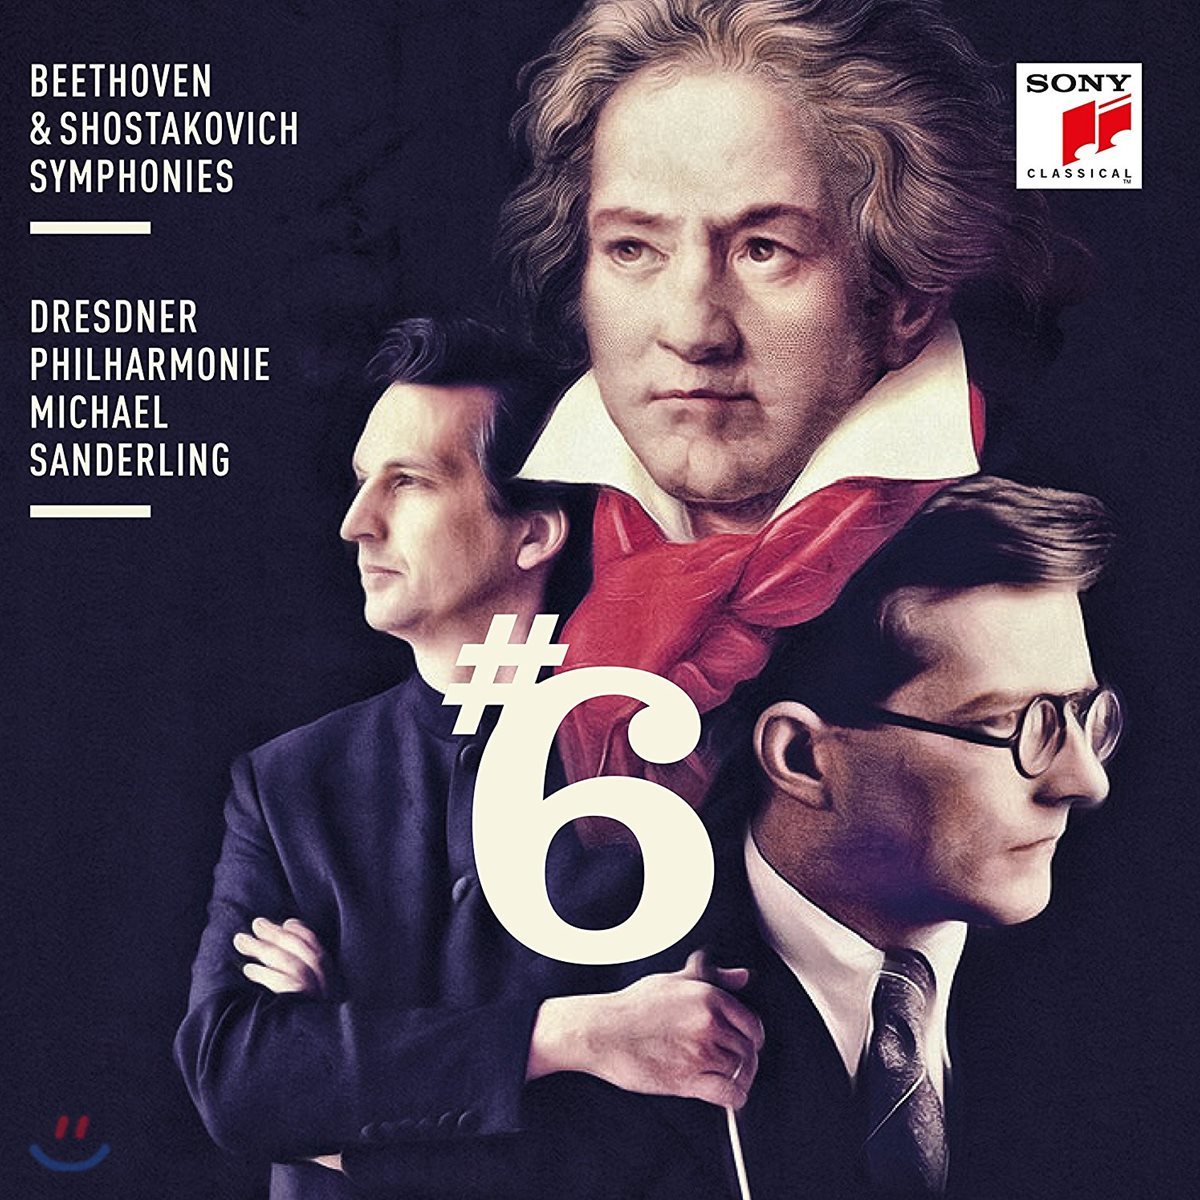 Michael Sanderling 베토벤 / 쇼스타코비치: 교향곡 6번 - 미하엘 잔데를링, 드레스덴 필하모닉 (Beethoven / Shostakovich: Symphonies No.6)